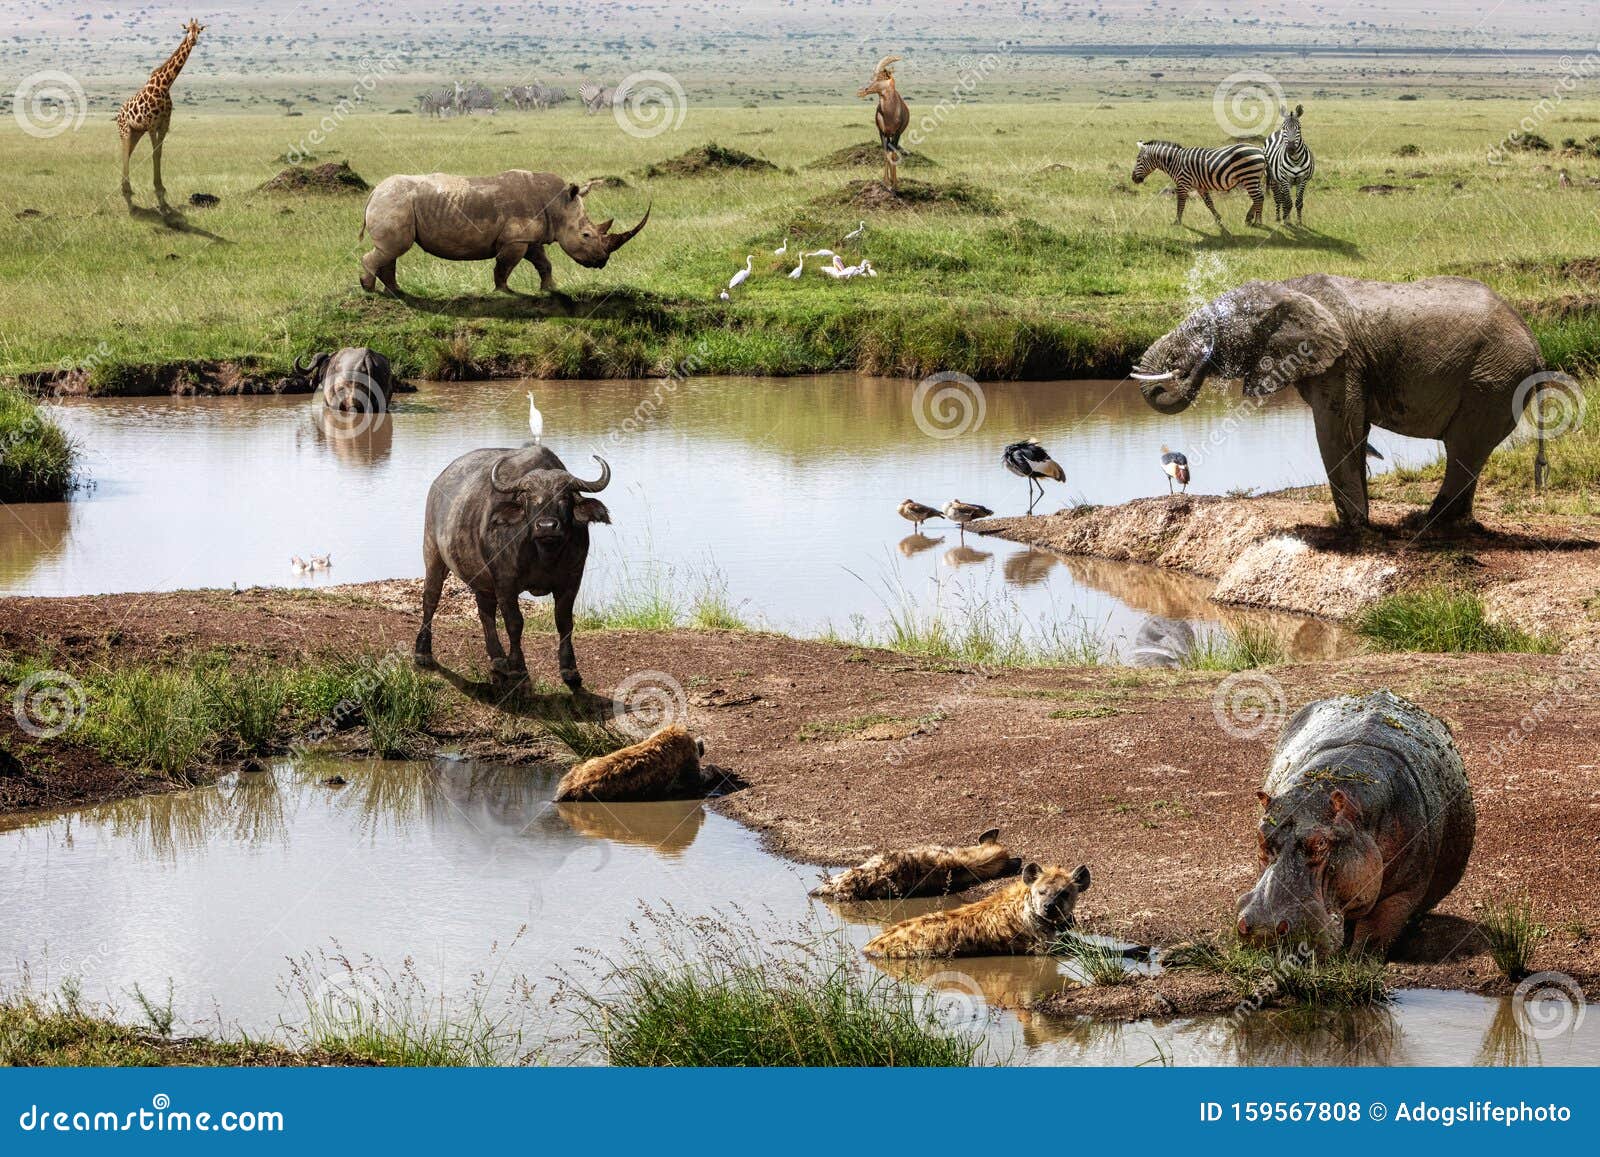 Kenya Africa Safari Animals Scene Stock Photo - Image of topi,  hippopotamus: 159567808